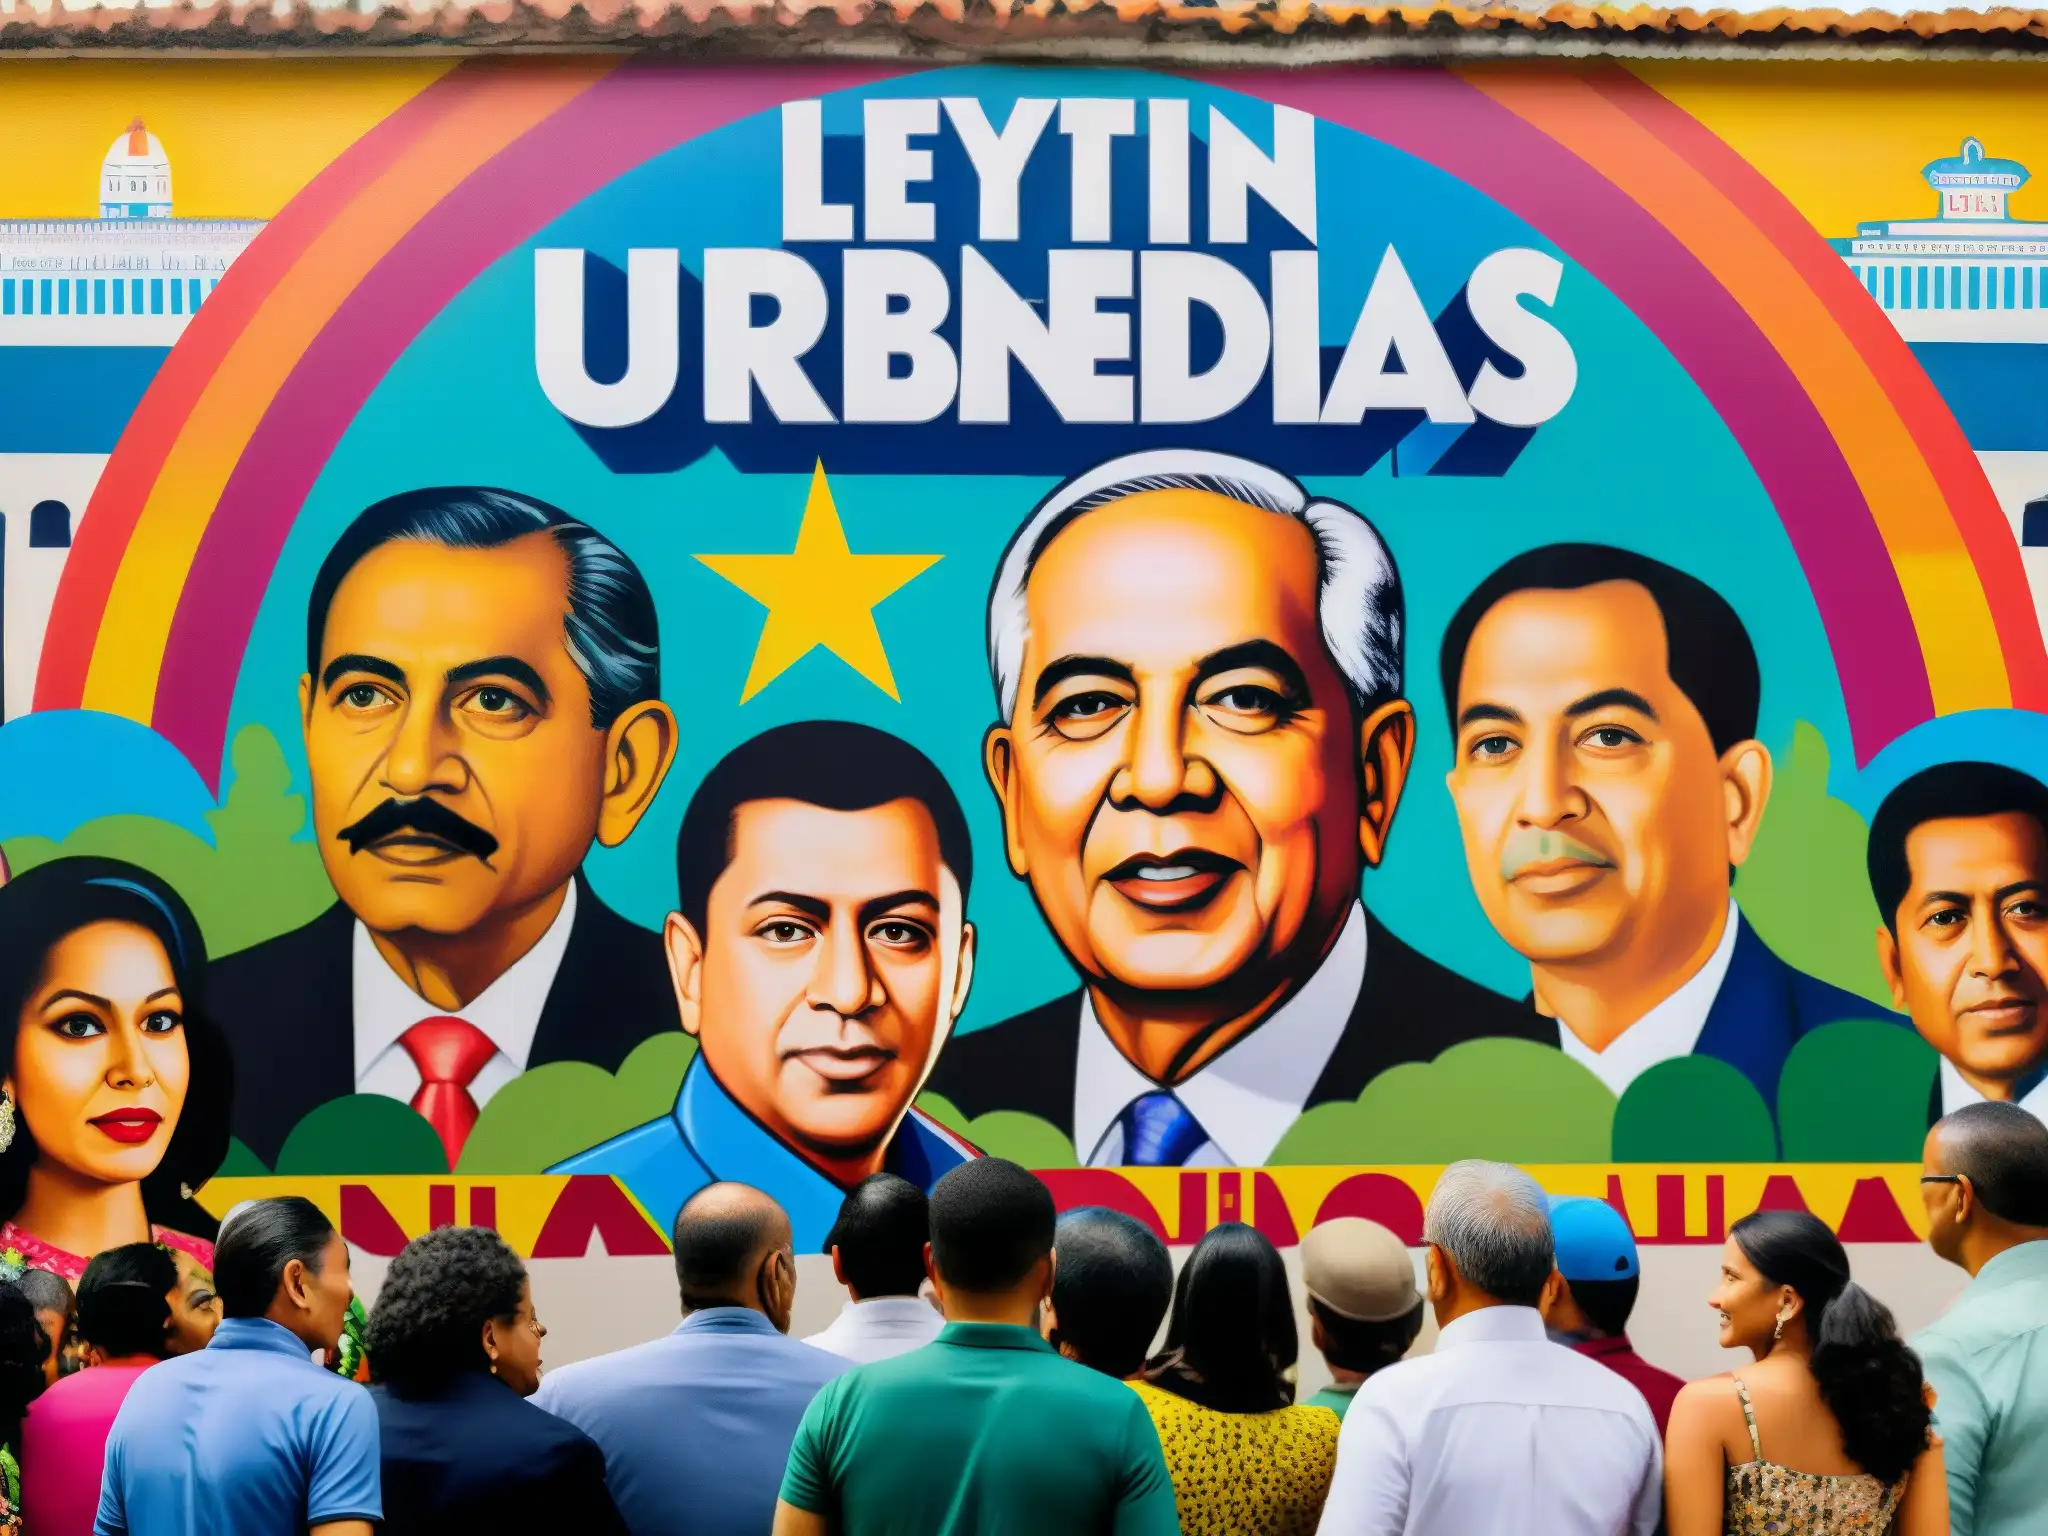 Un vibrante mural de presidentes latinoamericanos rodeados de personas, discutiendo sobre leyendas urbanas